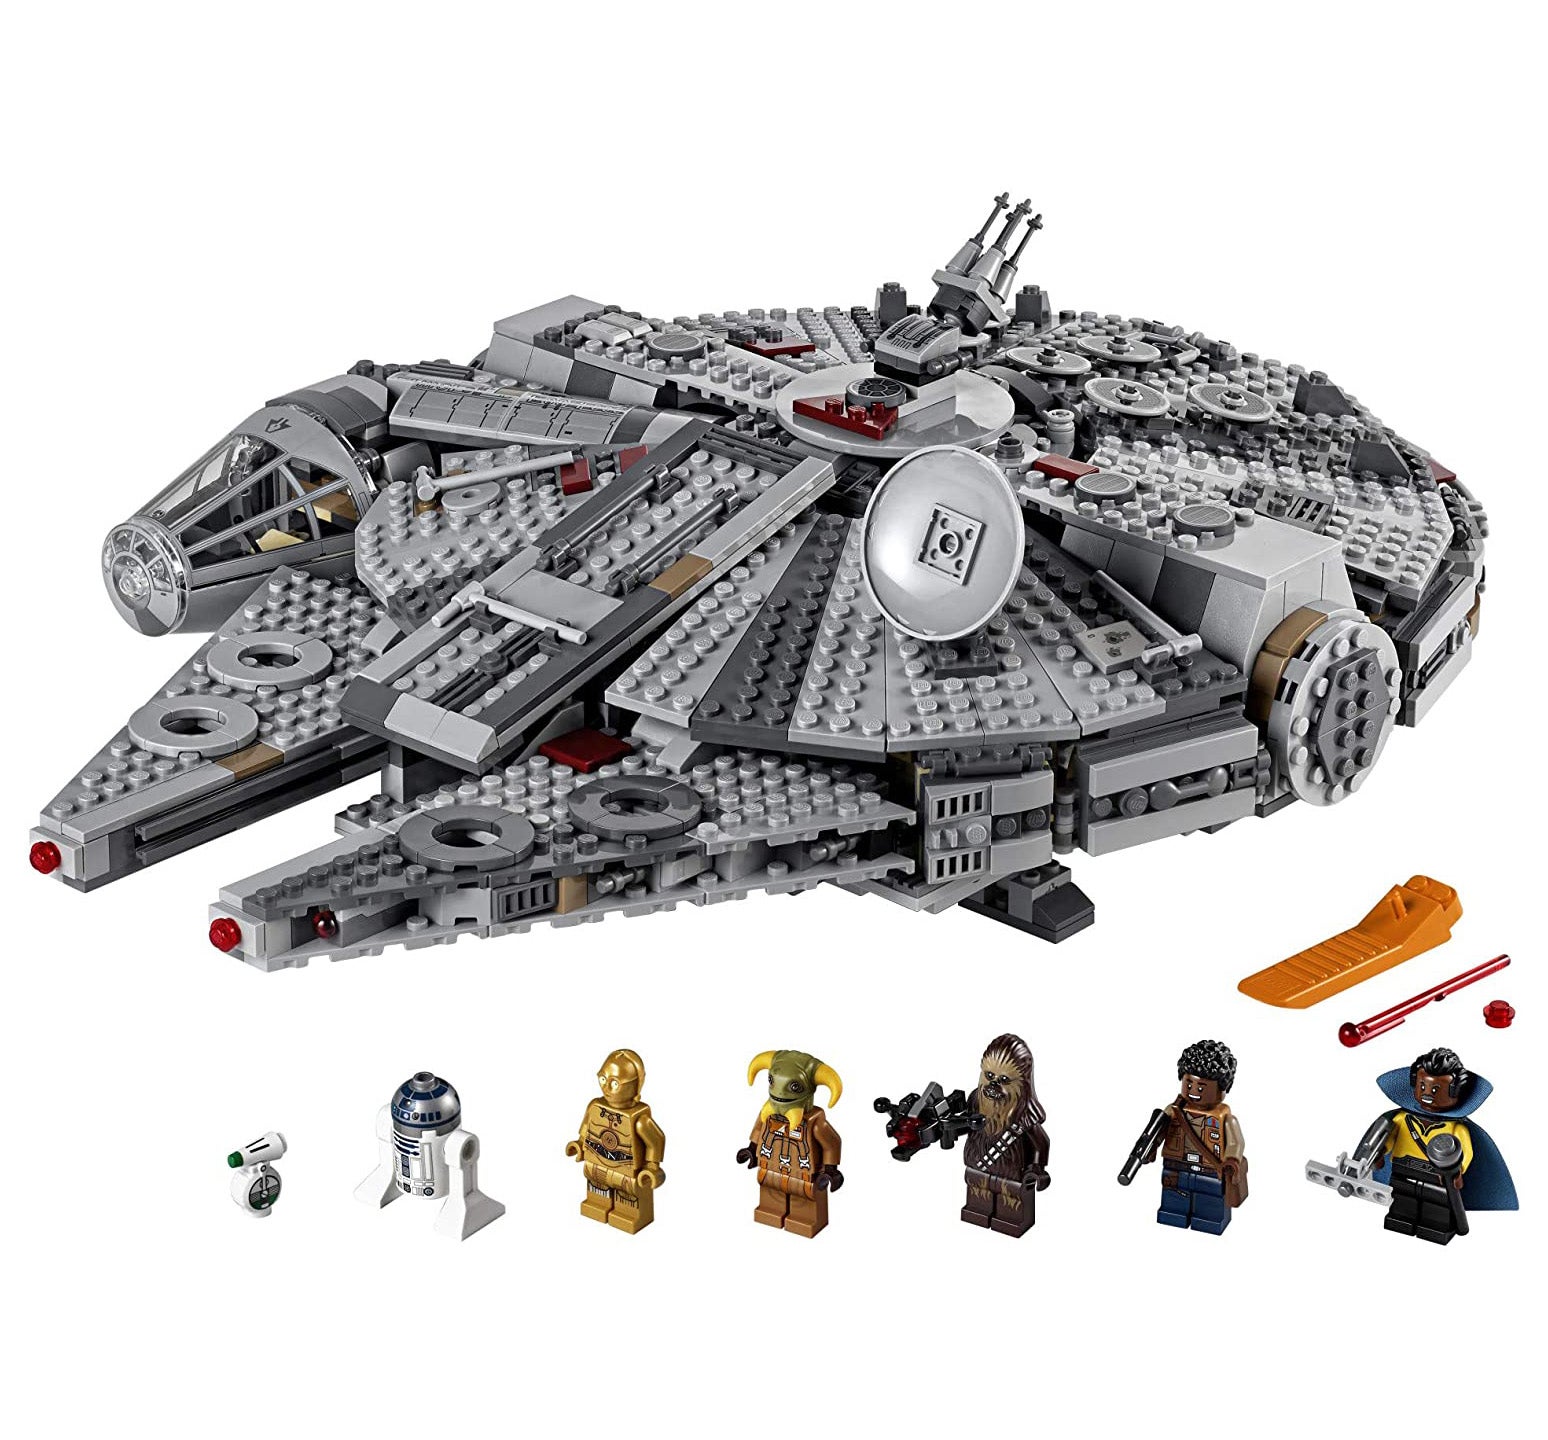 Lego Star Wars Millennium Falcon Building Kit